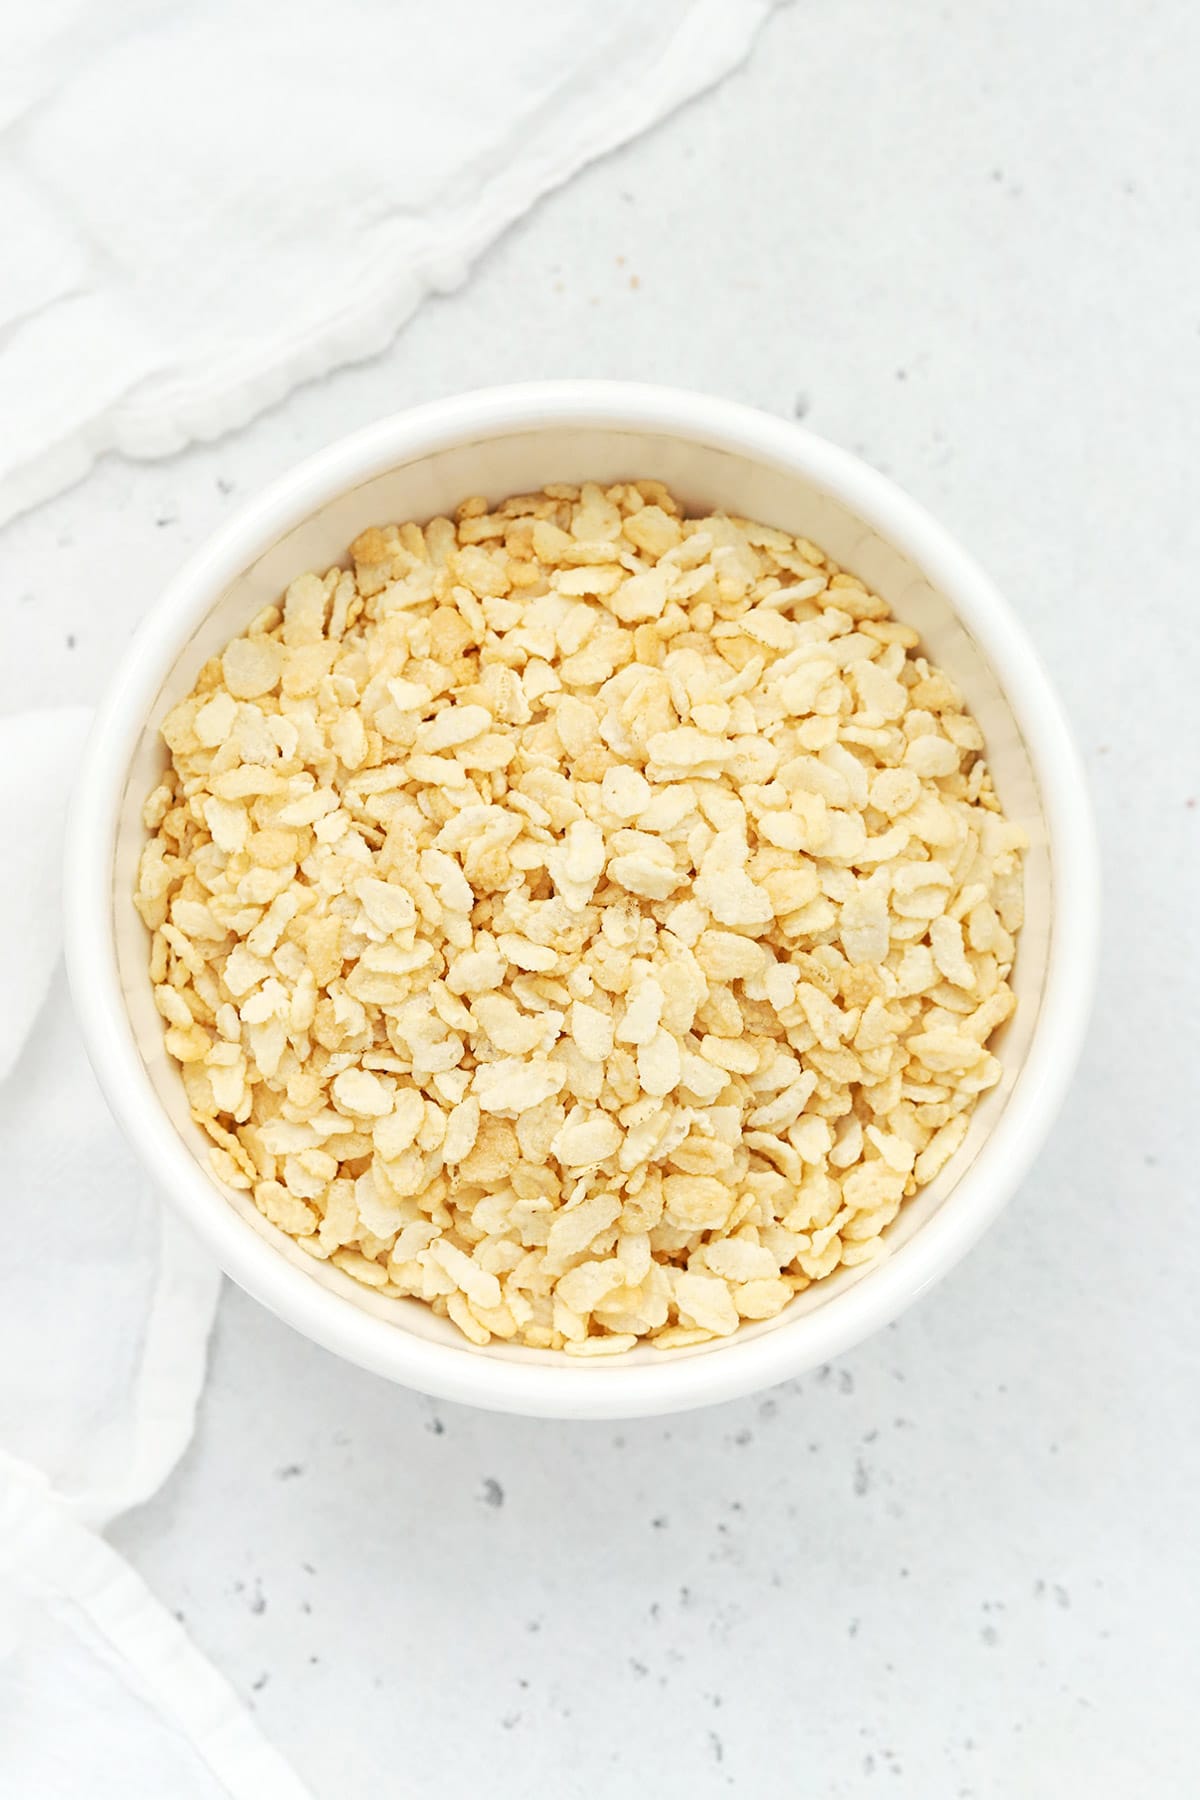 Overhead view of Barbara's gluten-free crisp rice cereal